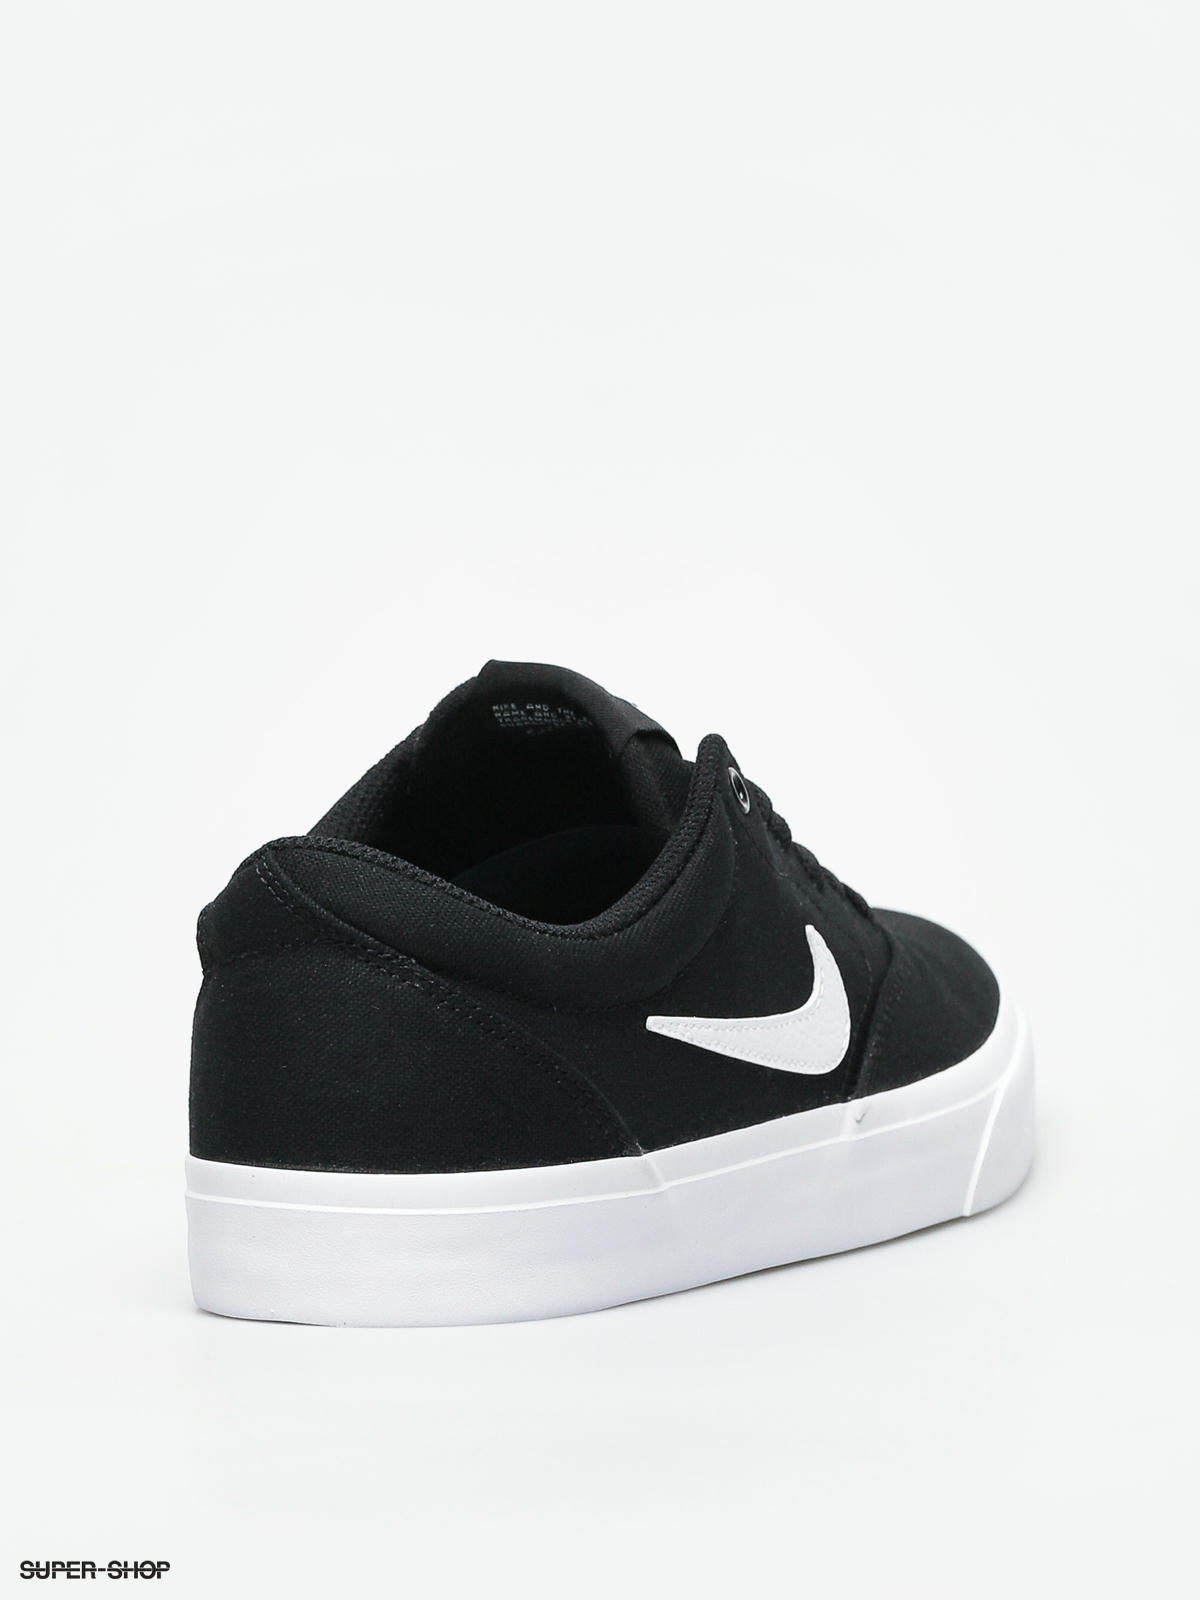 Nike SB Charge Slr Shoes (black/white)